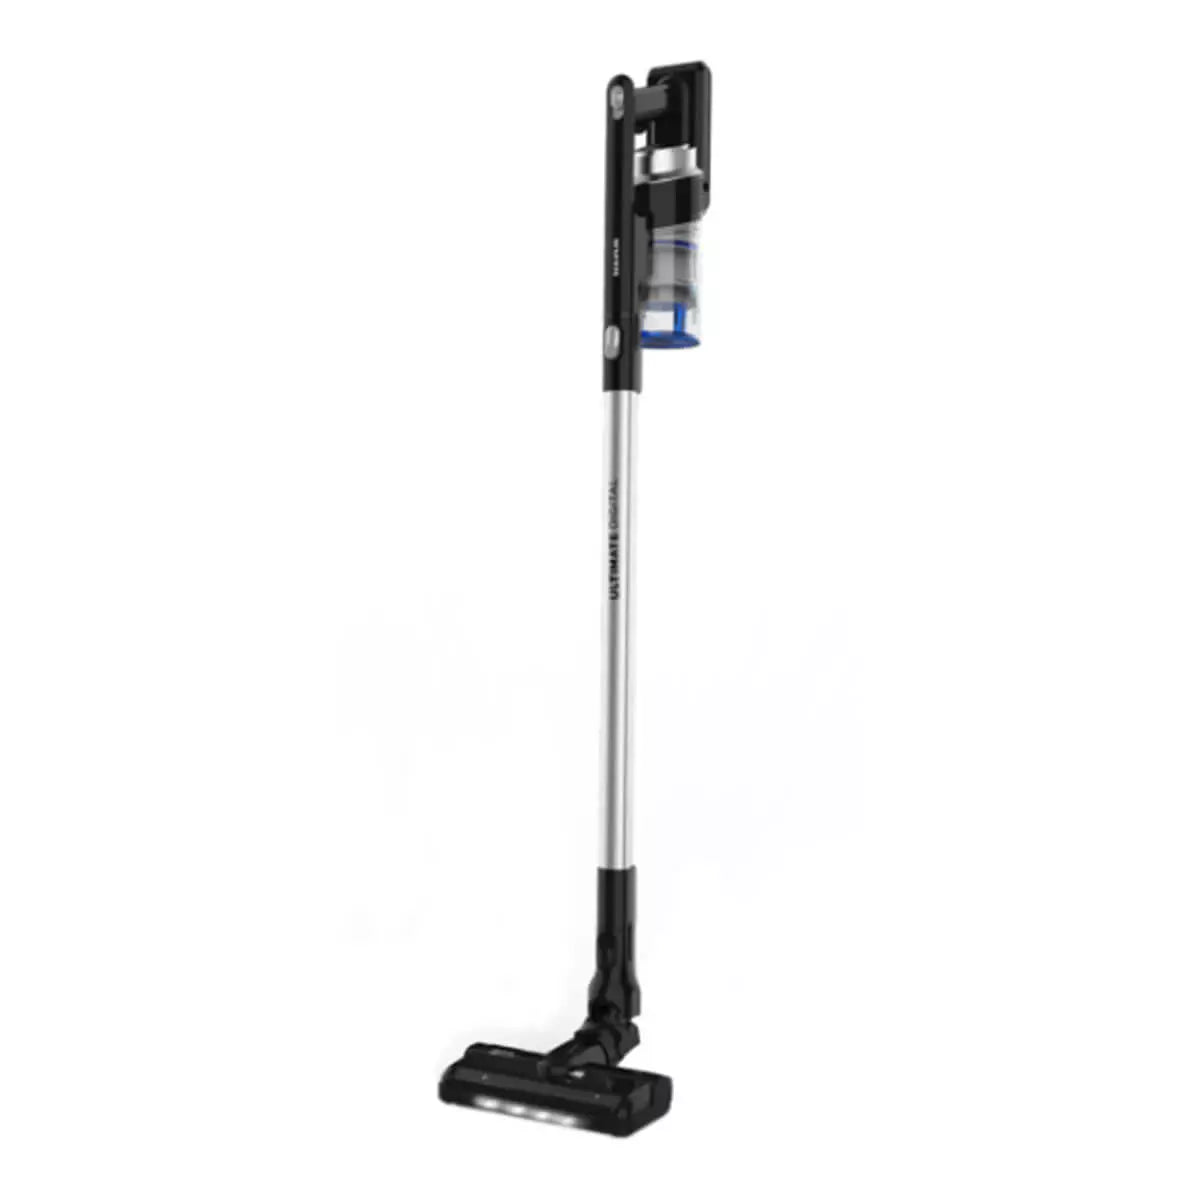 Broom vacuum cleaner Ultimate Go - Taurus 